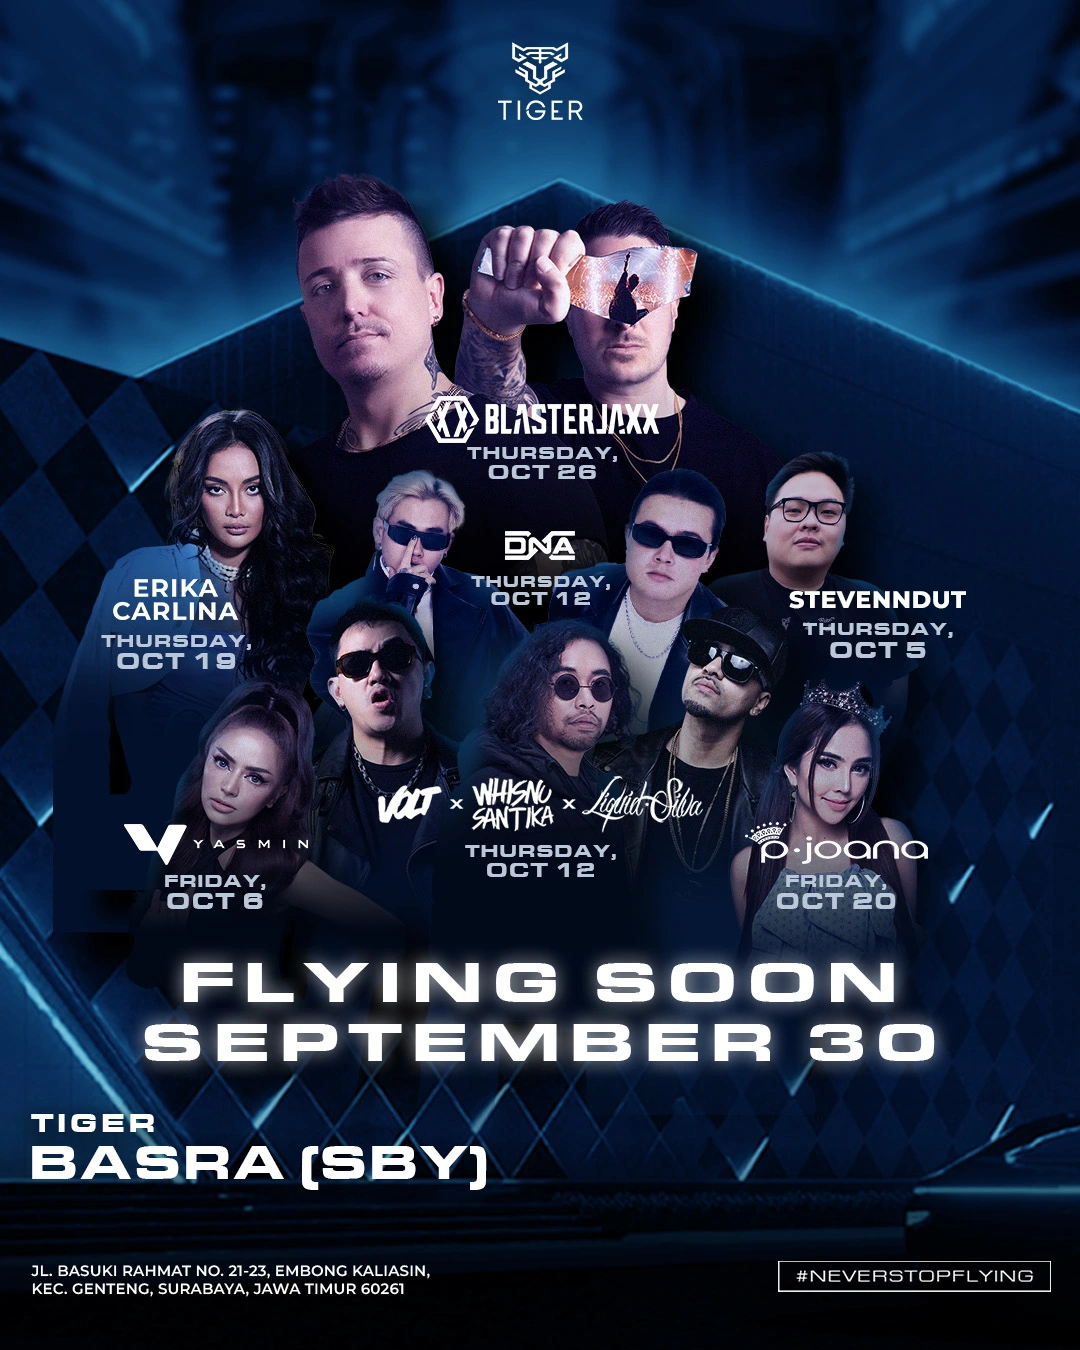 Stevenndut, Erica Carlina, and Blasterjaxx are all set to make a splash at the Grand Opening of HW Tiger Basra in Surabaya